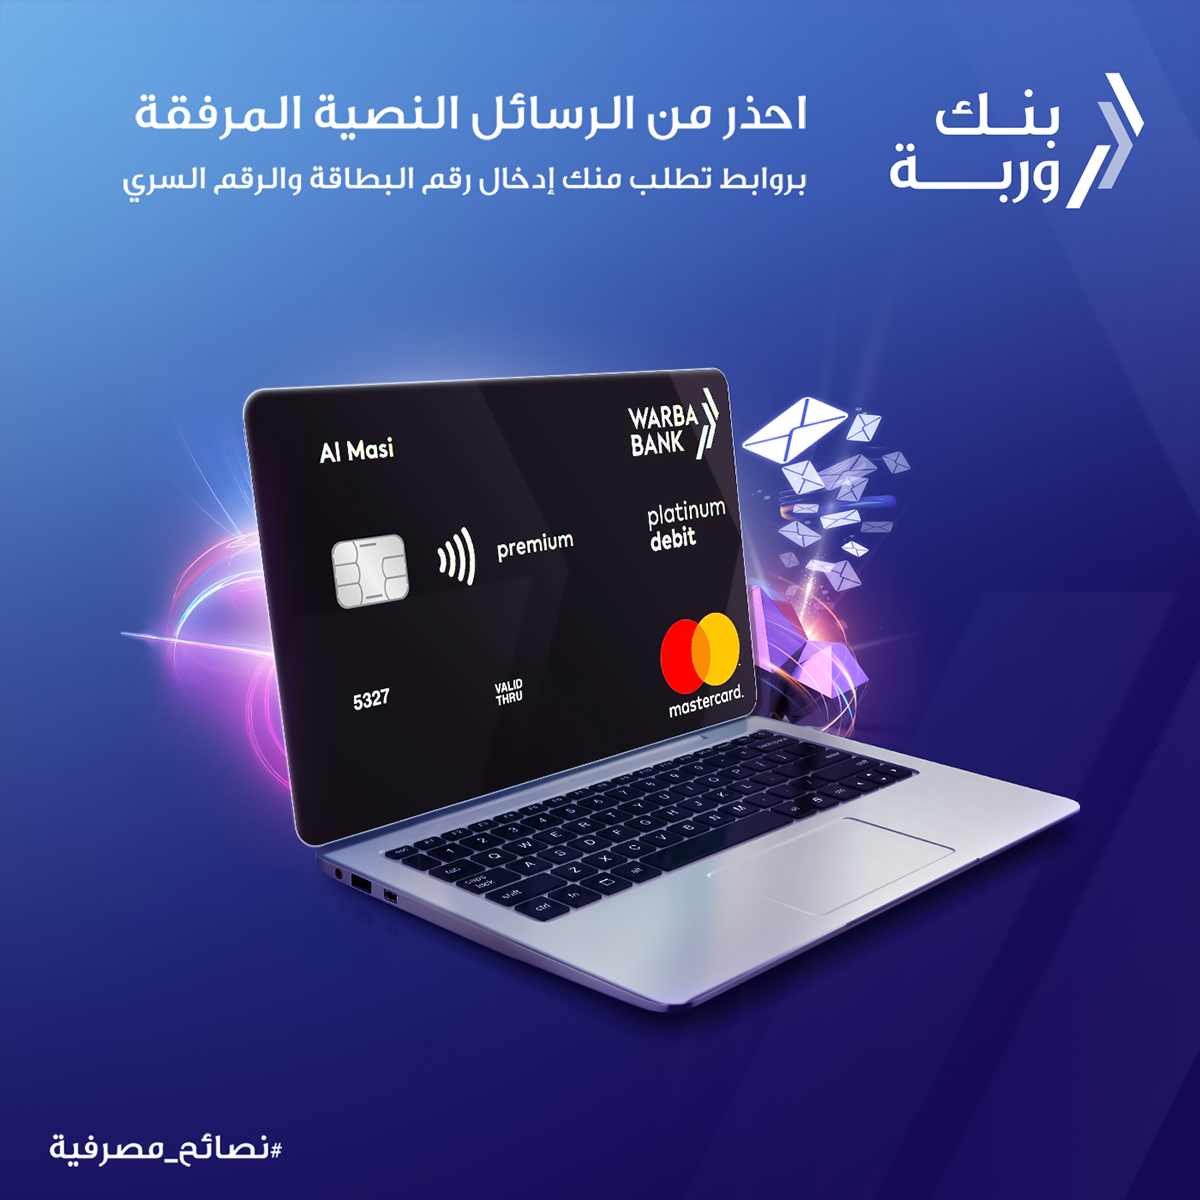 Bank money ads Kuwait branding  social MediaCreative retouching  KSA visual